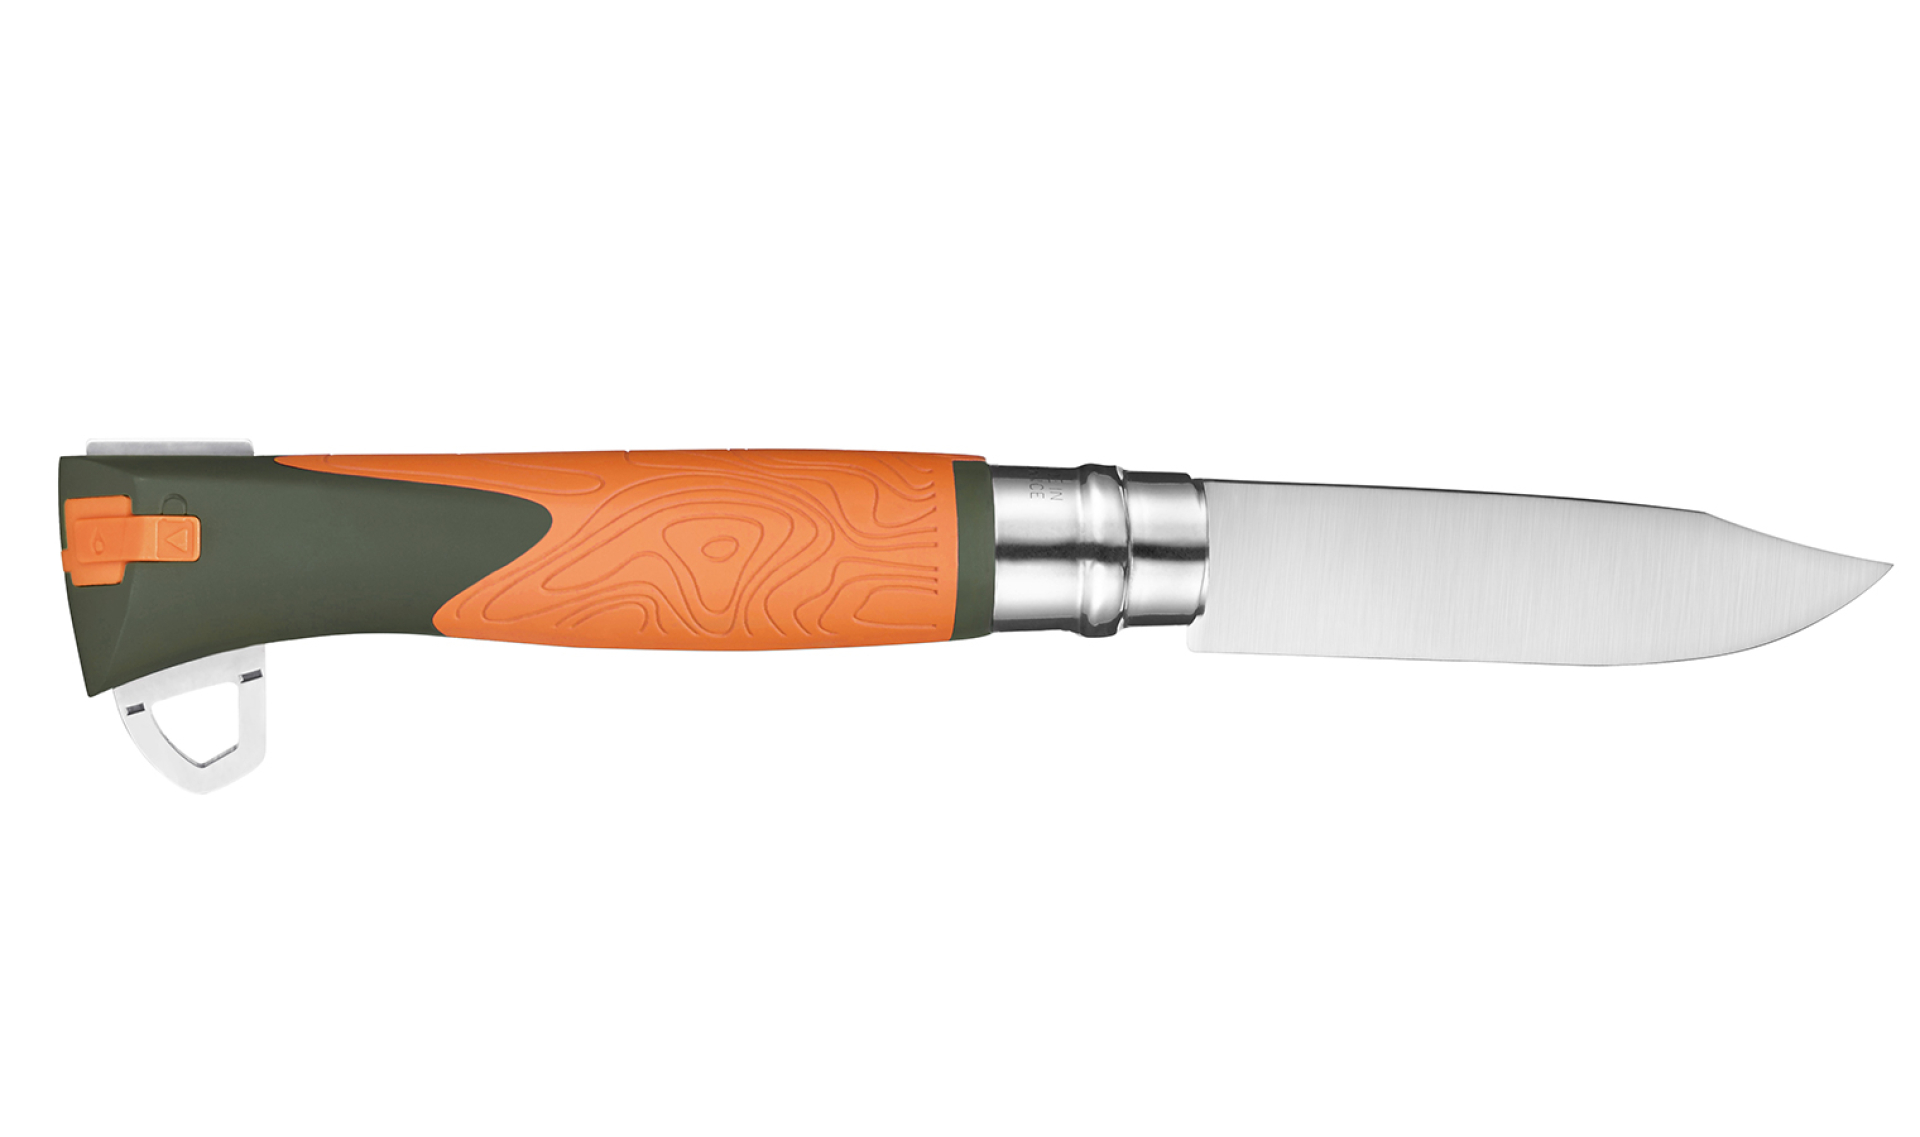 Opinel - No. 12 Explore Nature Bushcraft - Multipurpose Orange - Knife